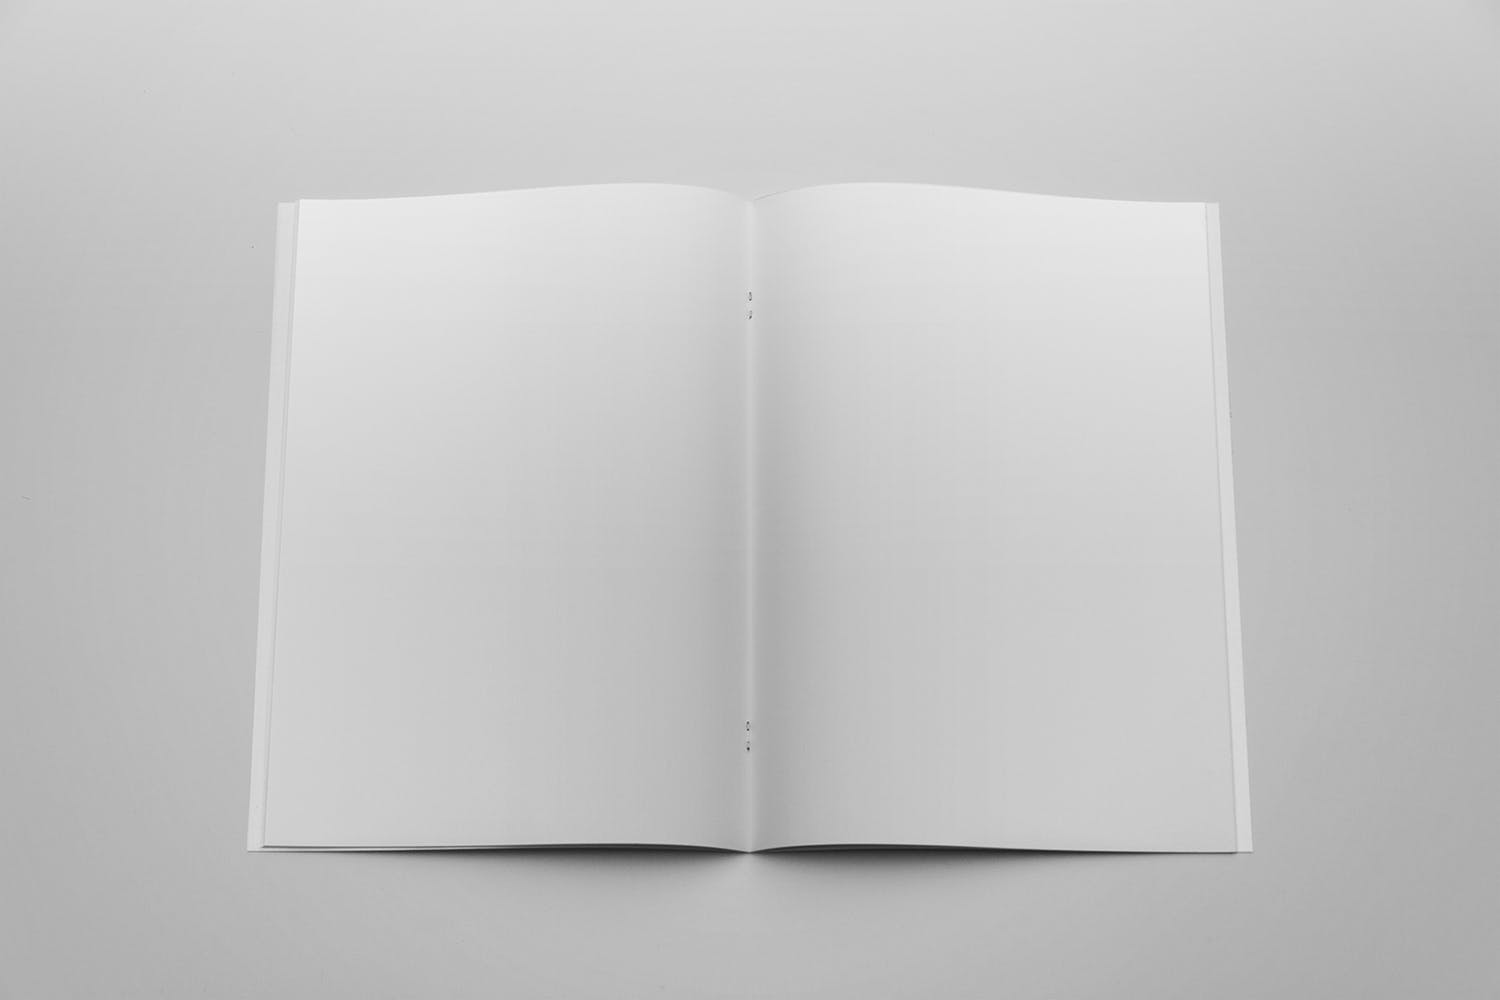 A4宣传小册子/企业画册内页设计顶视图样机16设计网精选 A4 Brochure Mockup Top View插图(1)